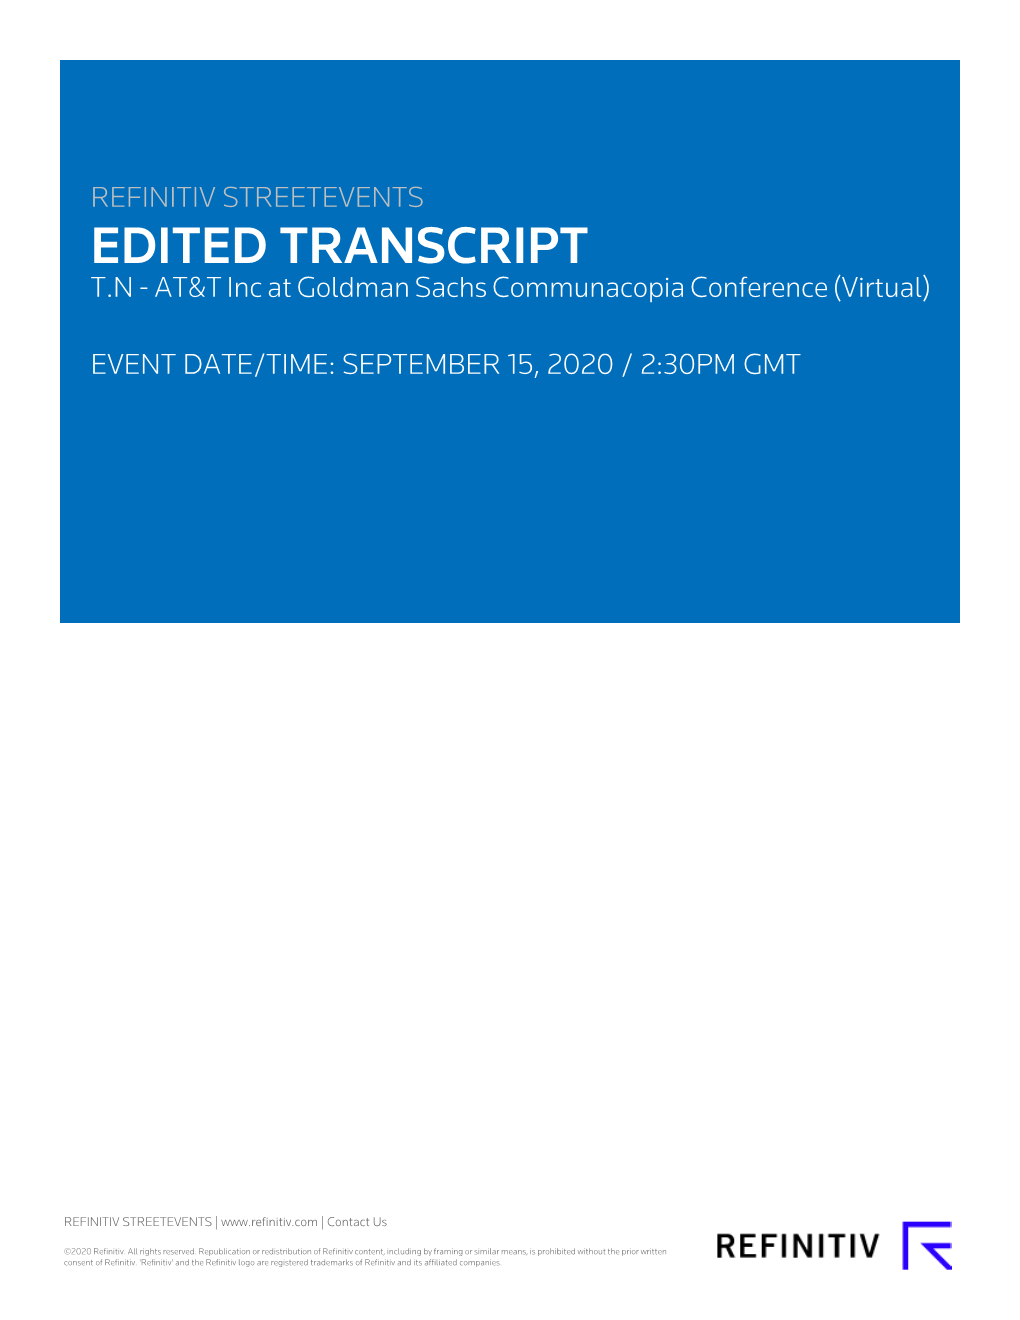 EDITED TRANSCRIPT T.N - AT&T Inc at Goldman Sachs Communacopia Conference (Virtual)